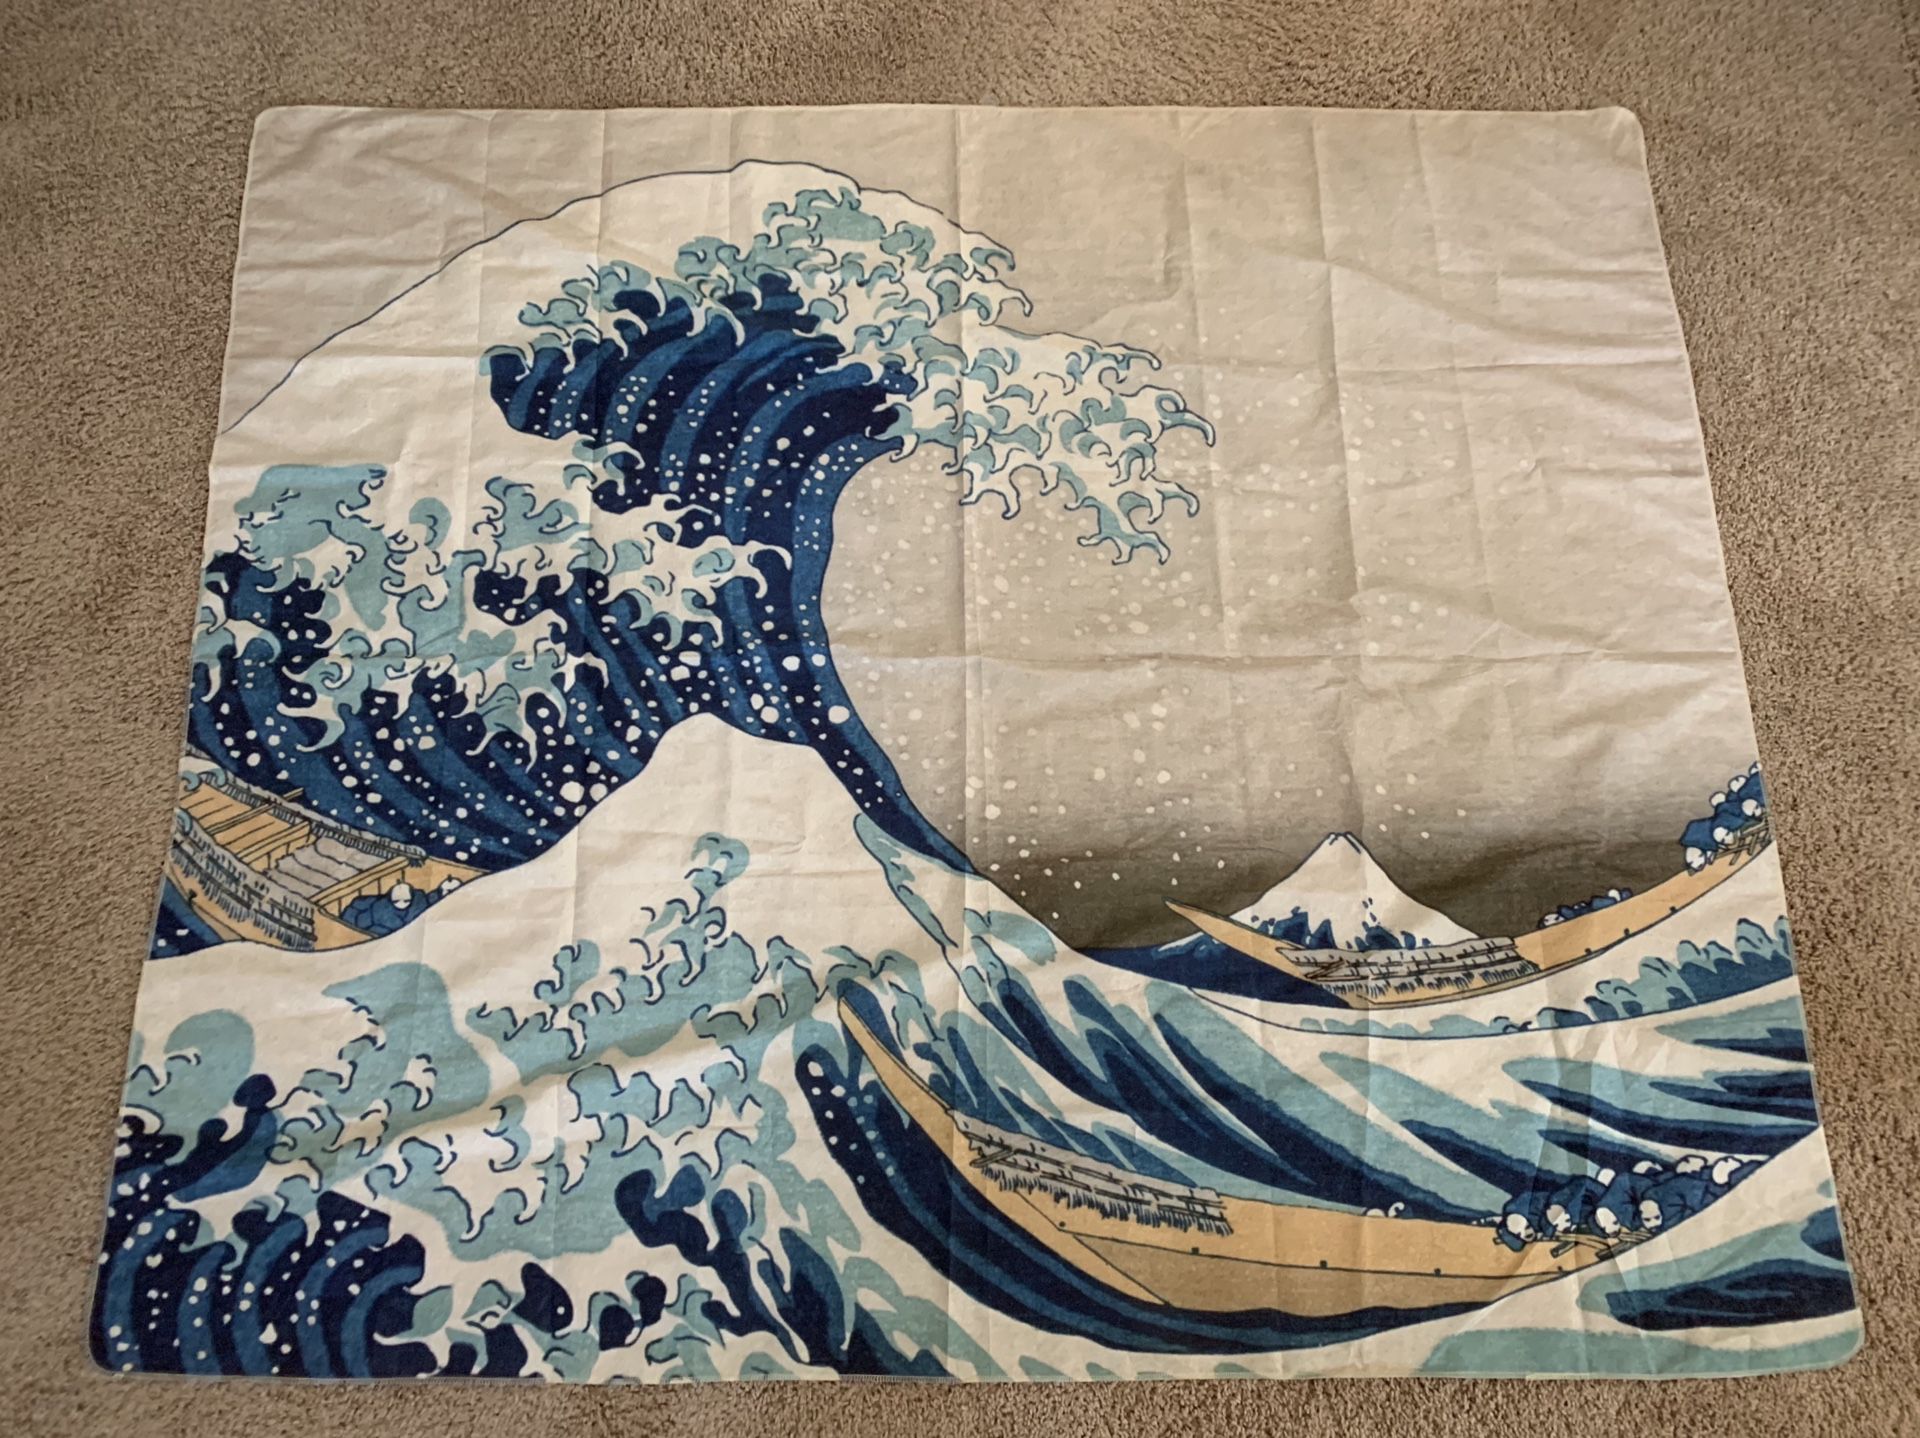 The great wave of kanagawa tapestry